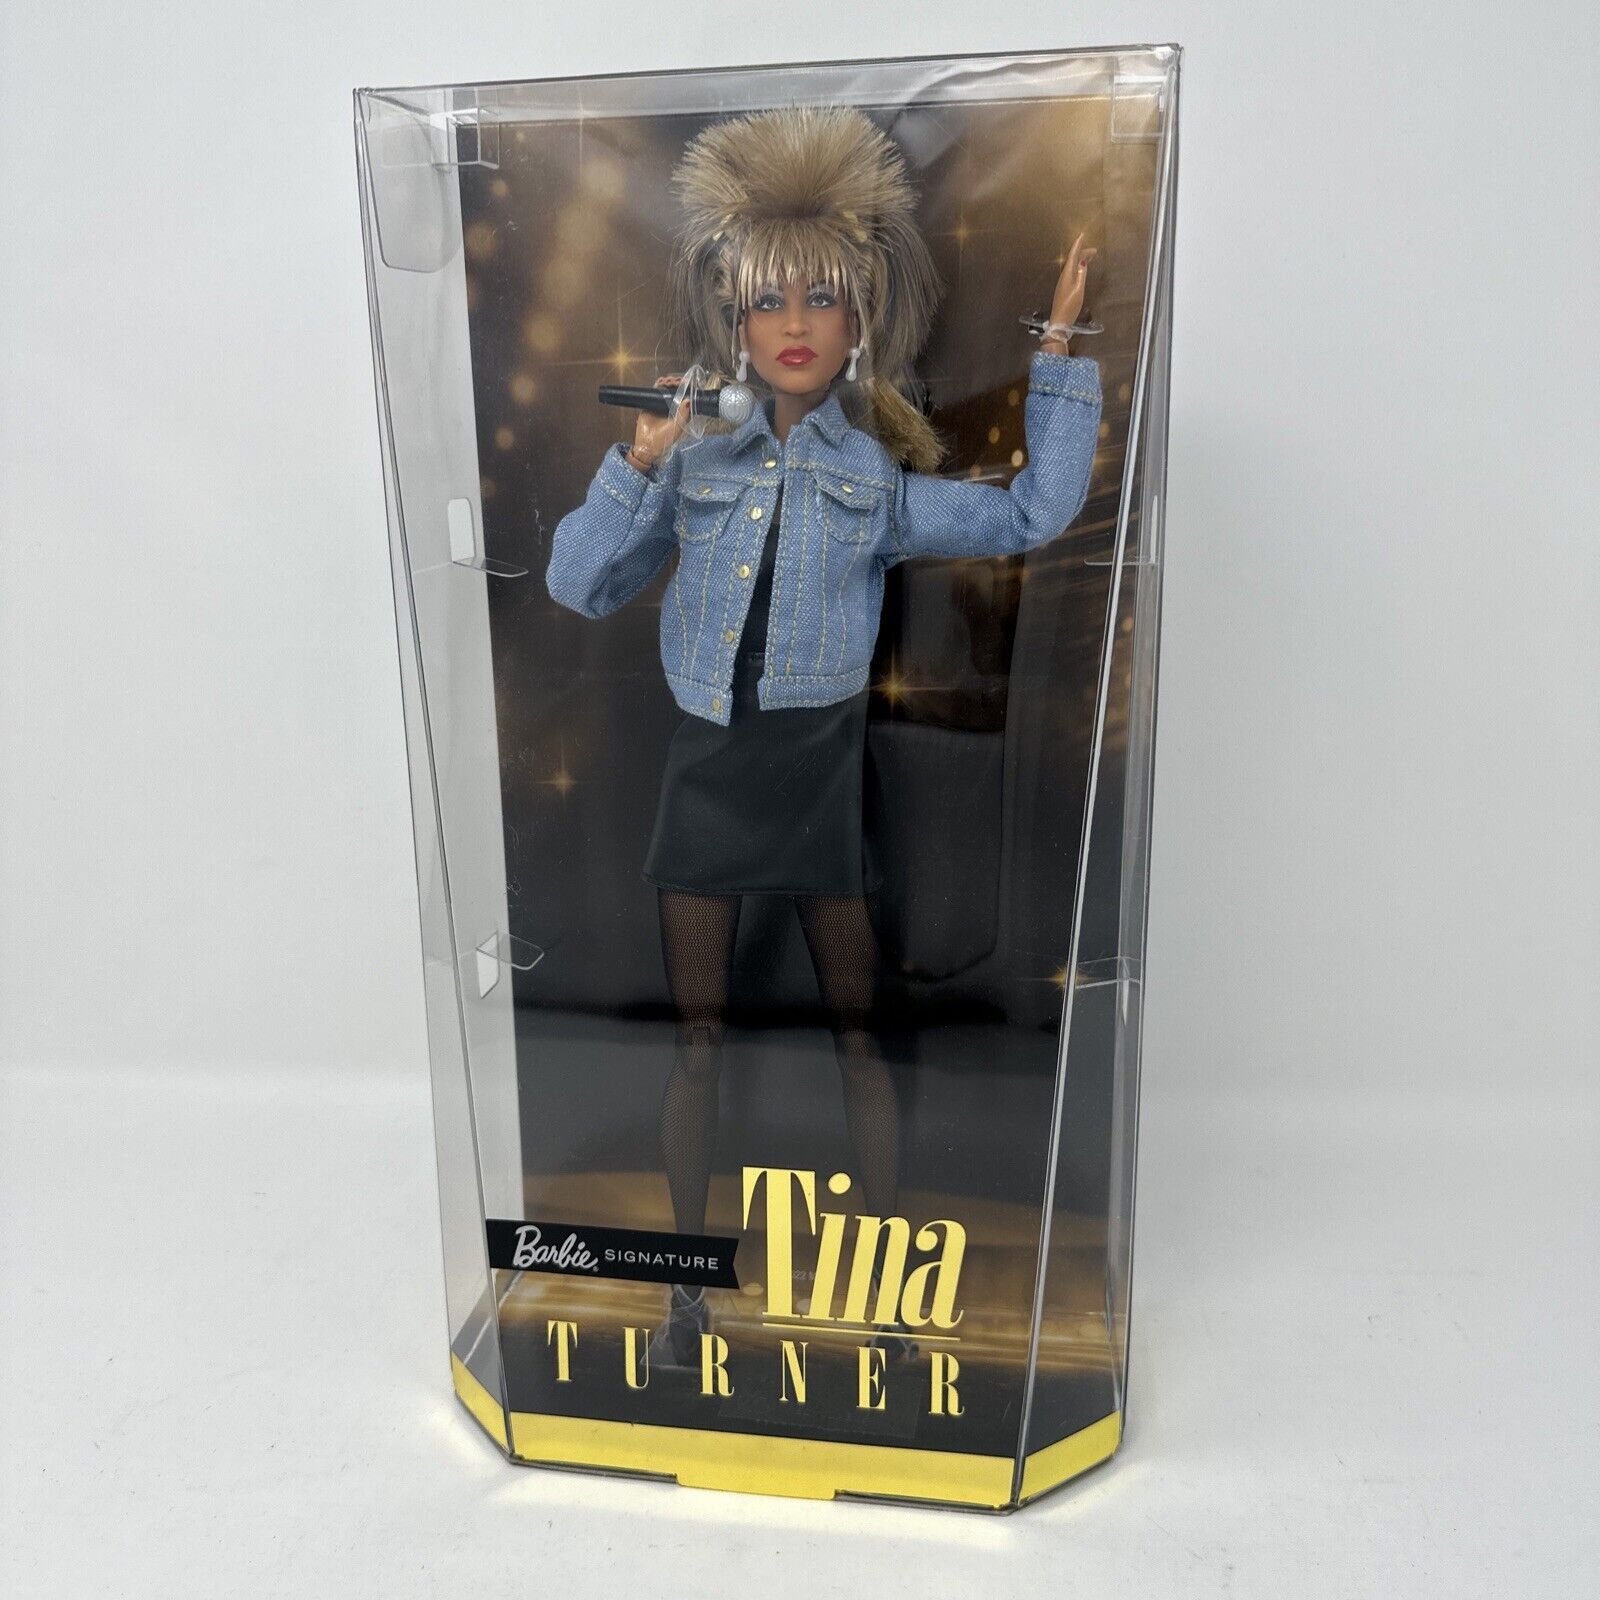 Signature Tina Turner Barbie, for sale on eBay